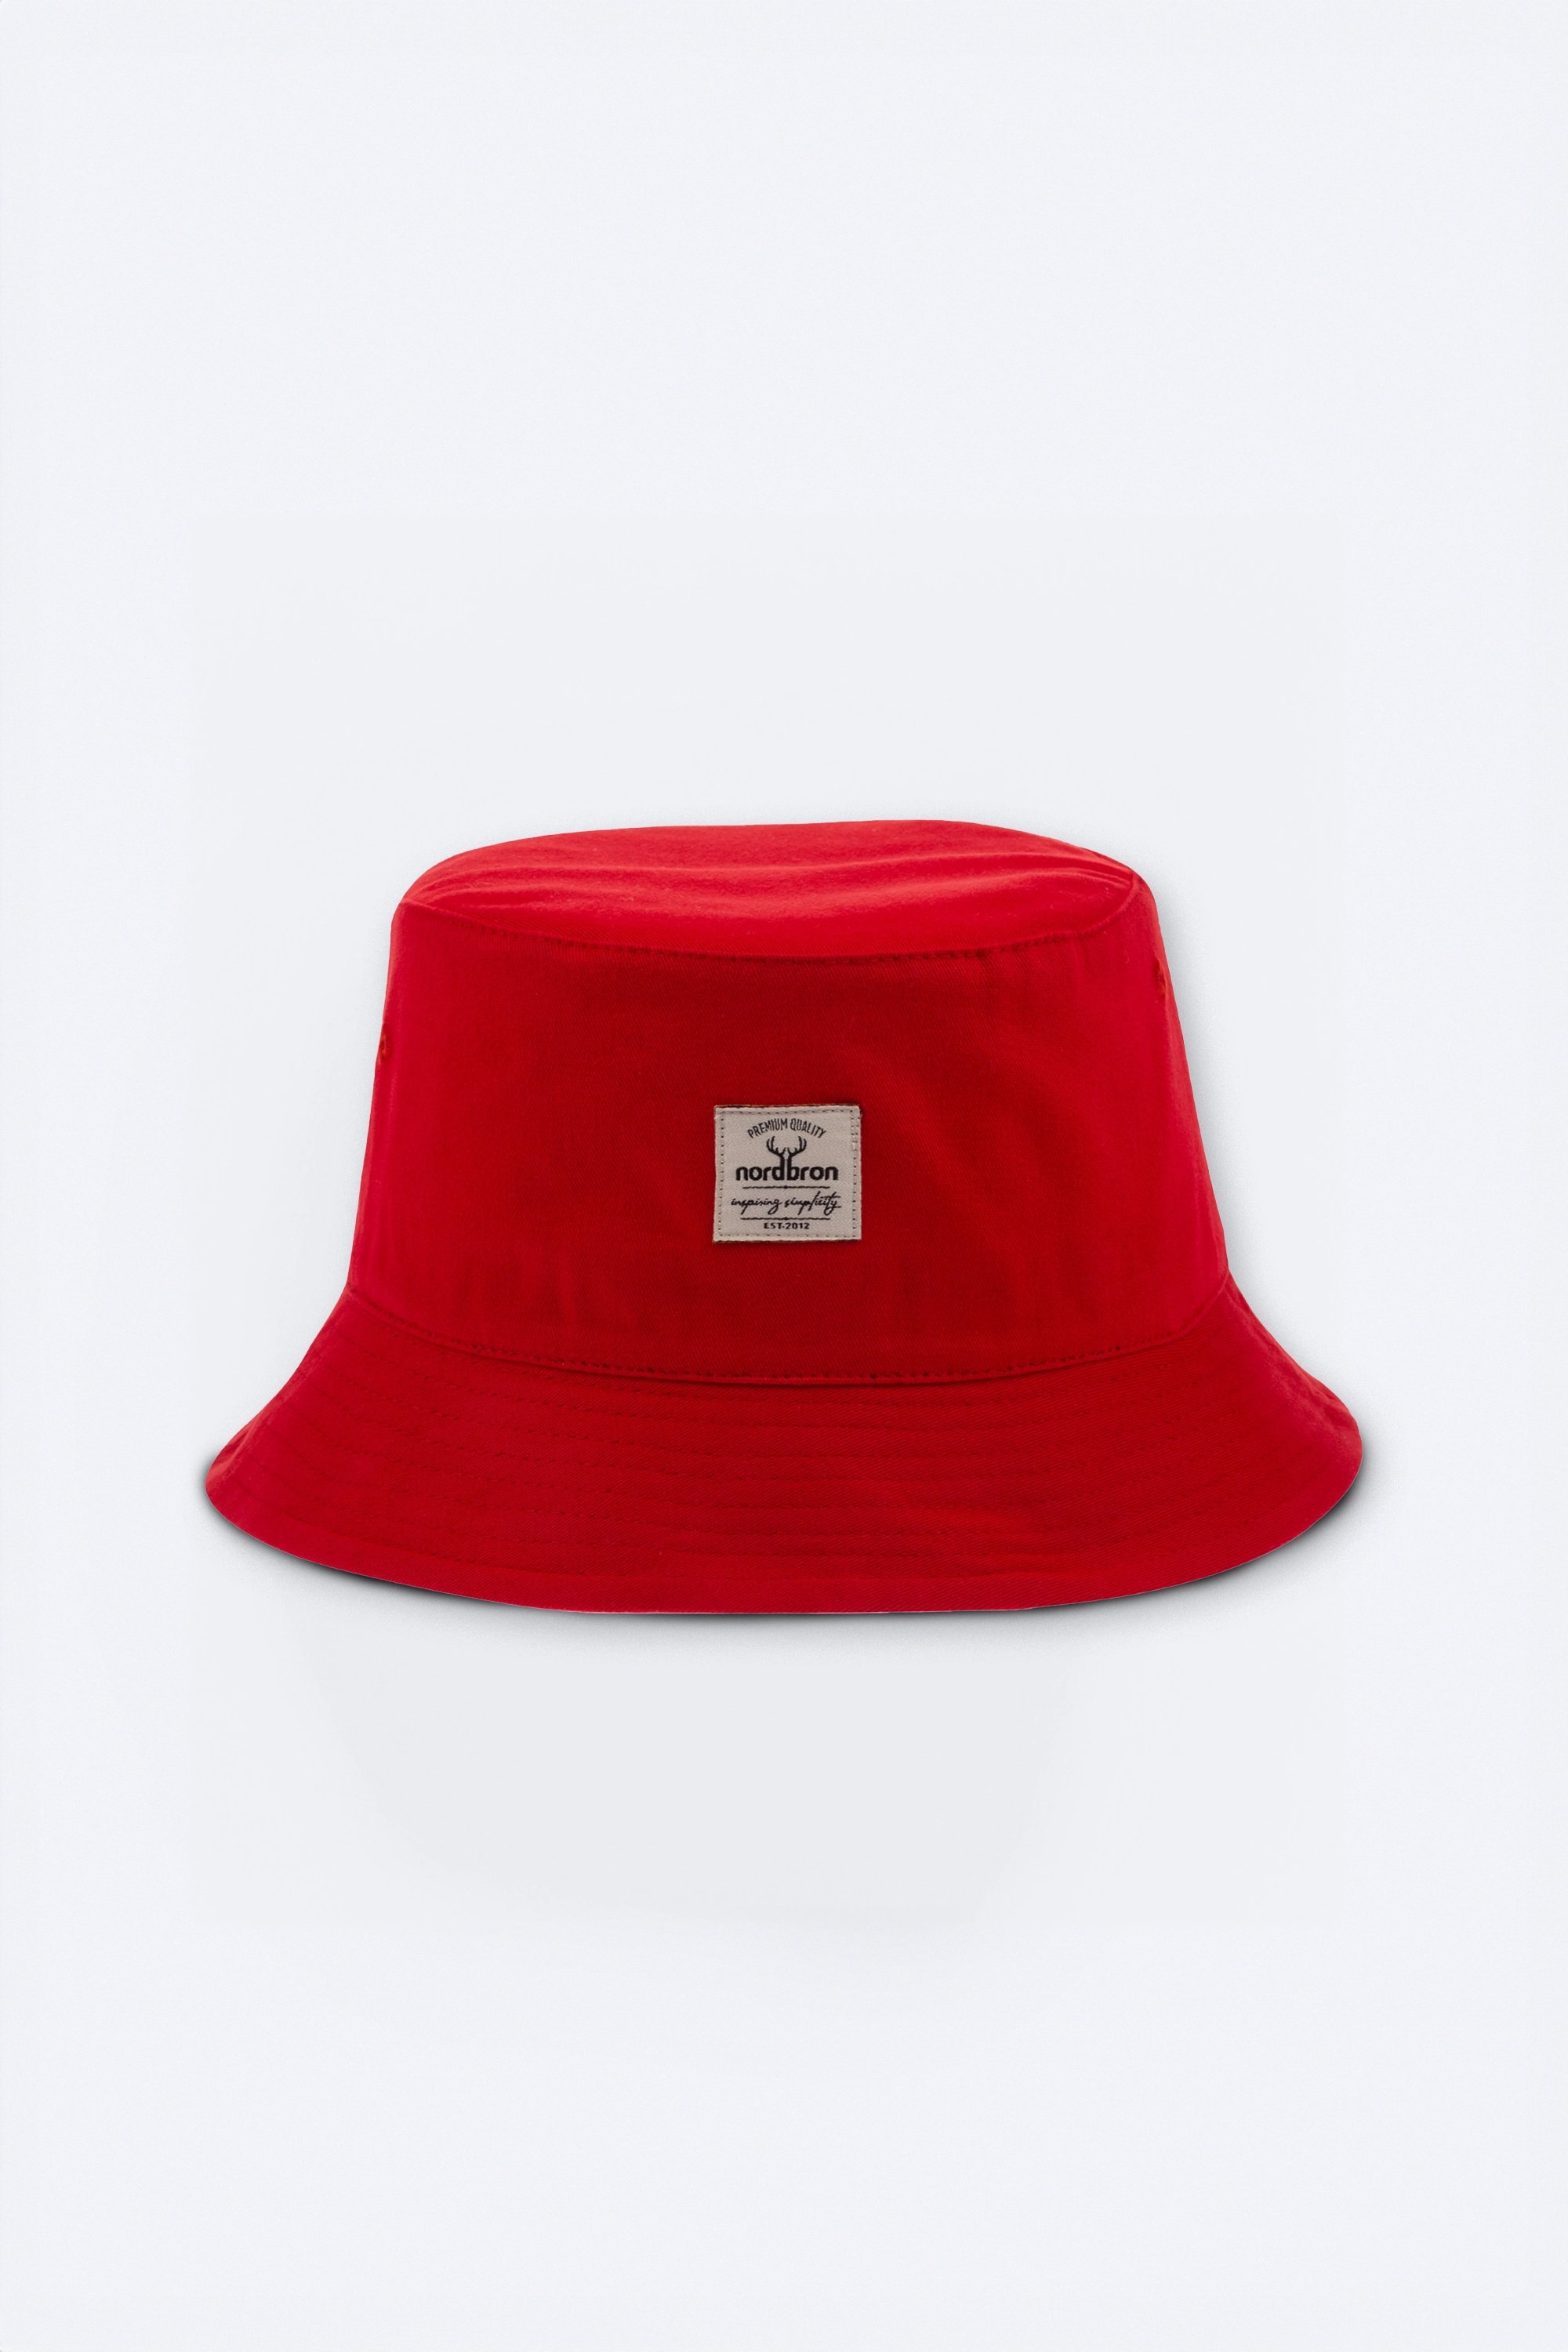 Stacci Kova Şapka - Kırmızı